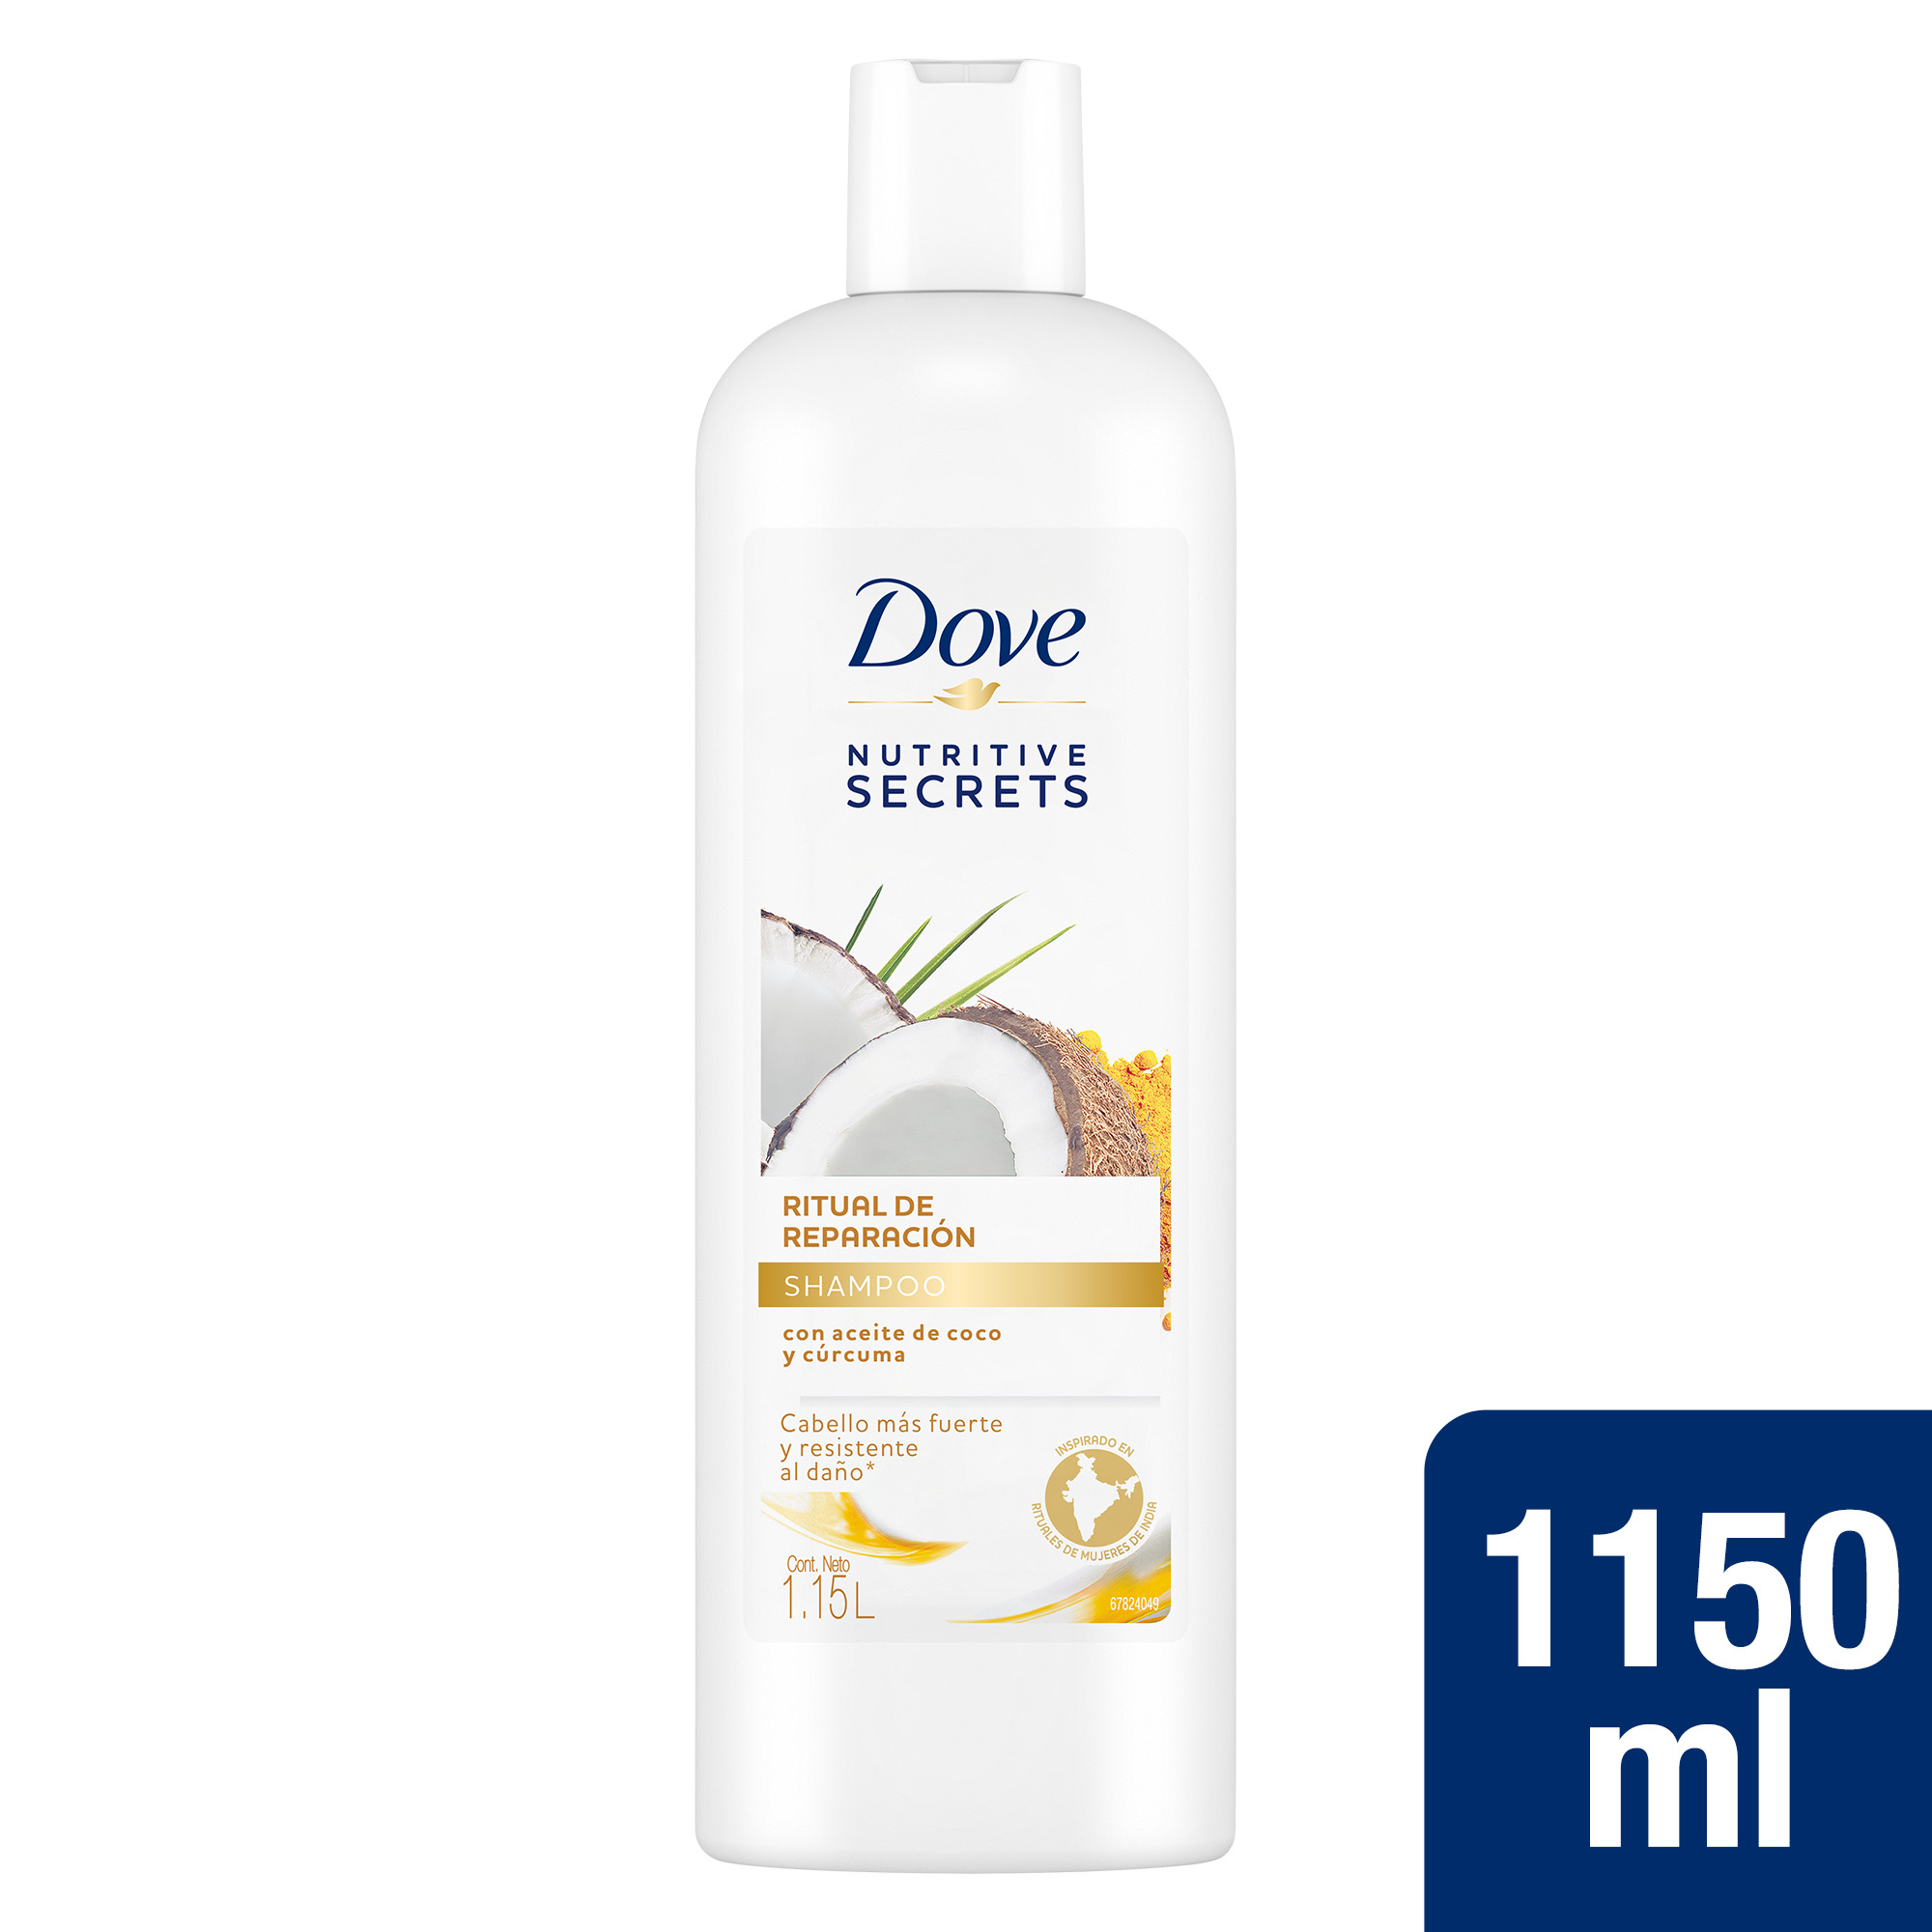 Dove shampoo nutritive secrets ritual reparación (1.15 l)